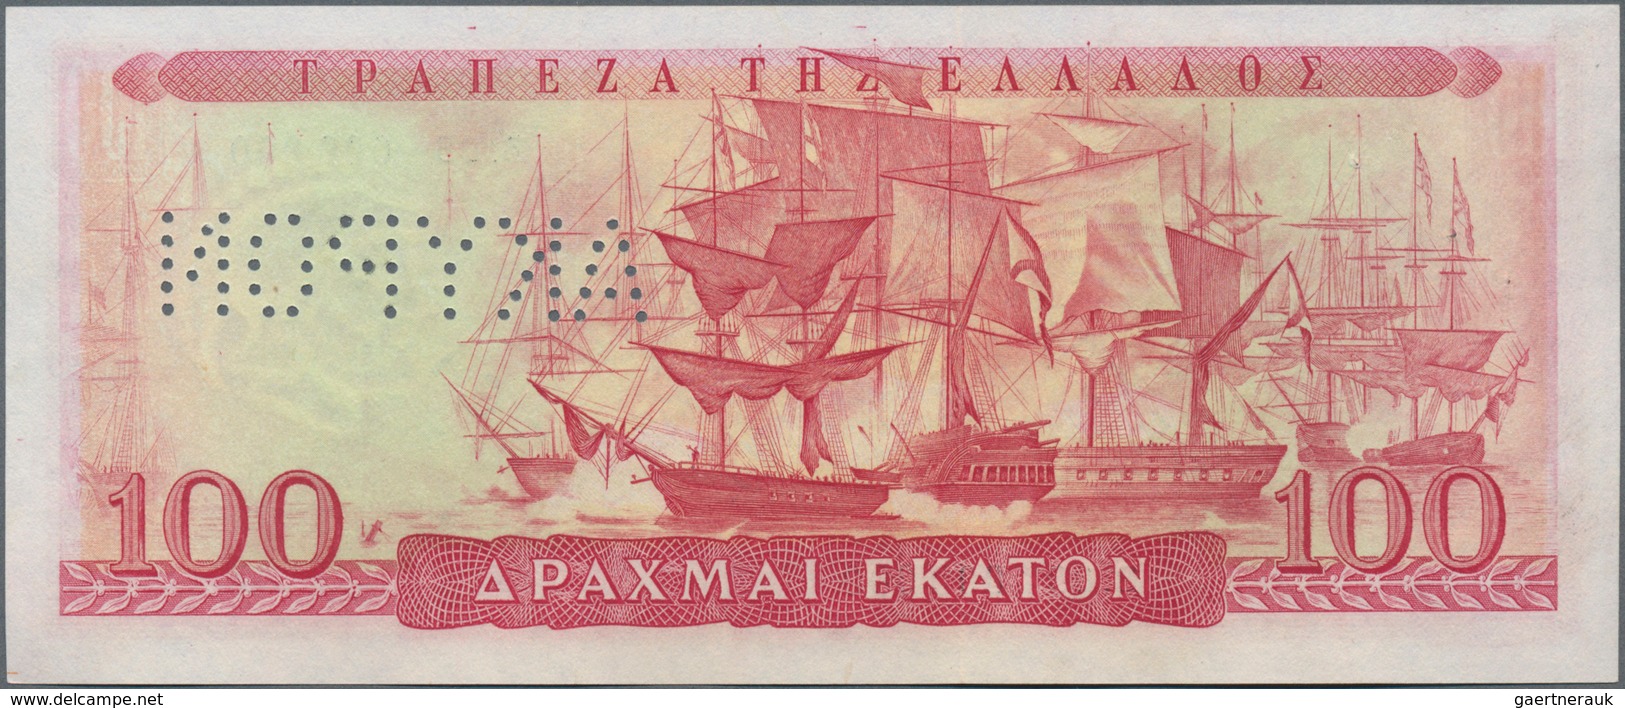 Greece / Griechenland: 100 Drachmai 1955 SPECIMEN, P.192bs, Serial Number B.03 000000 With Black Ove - Griekenland